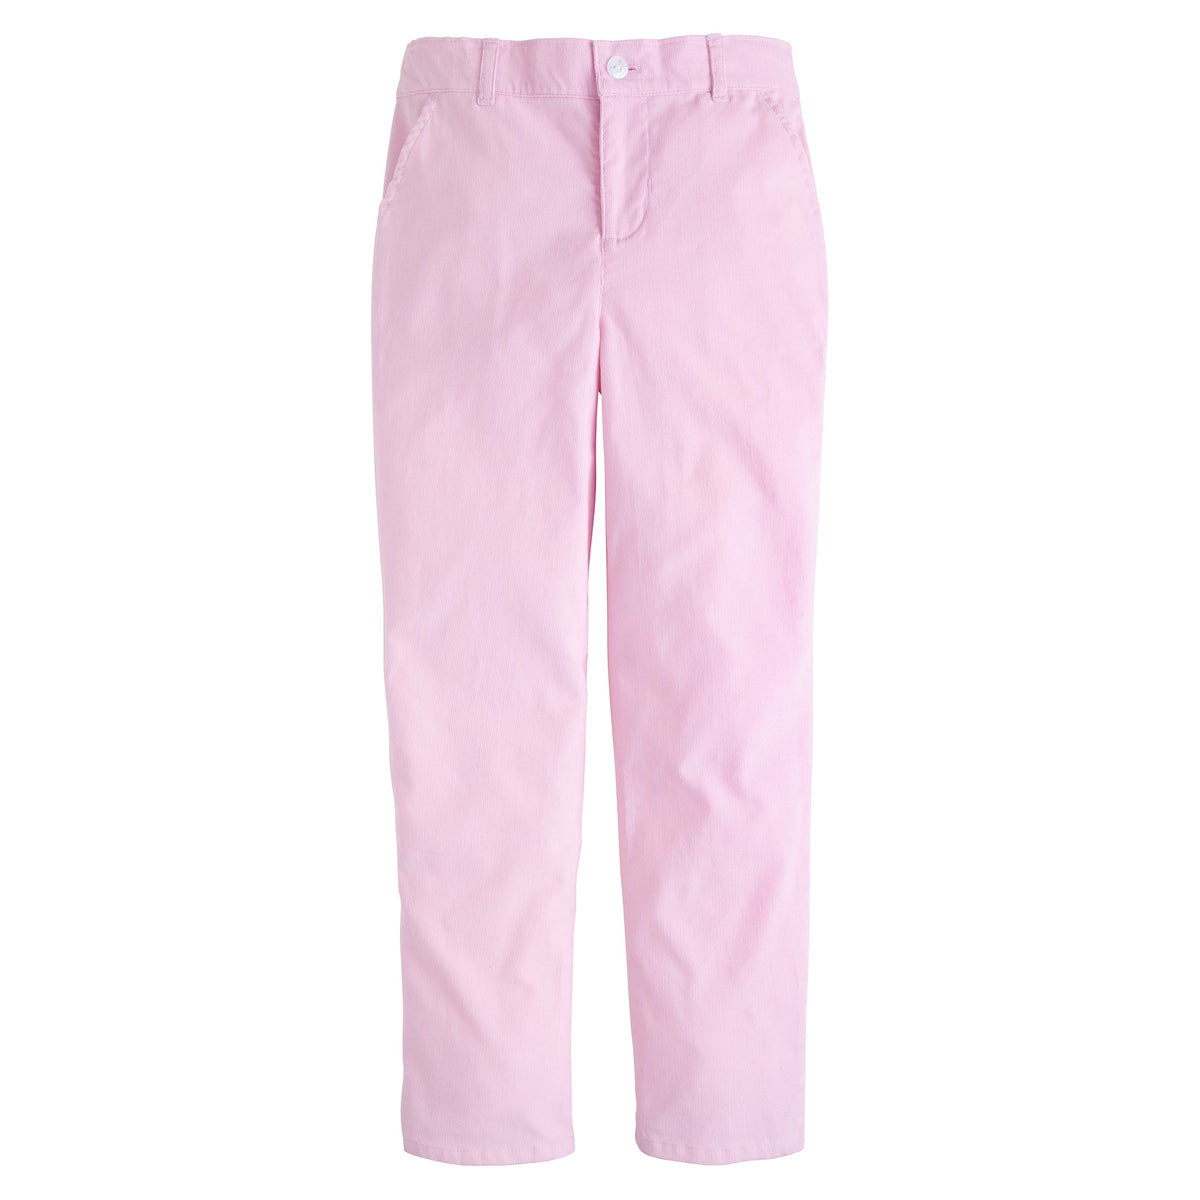 seguridadindustrialcr classic childrens clothing girls light pink corduroy skinny pant